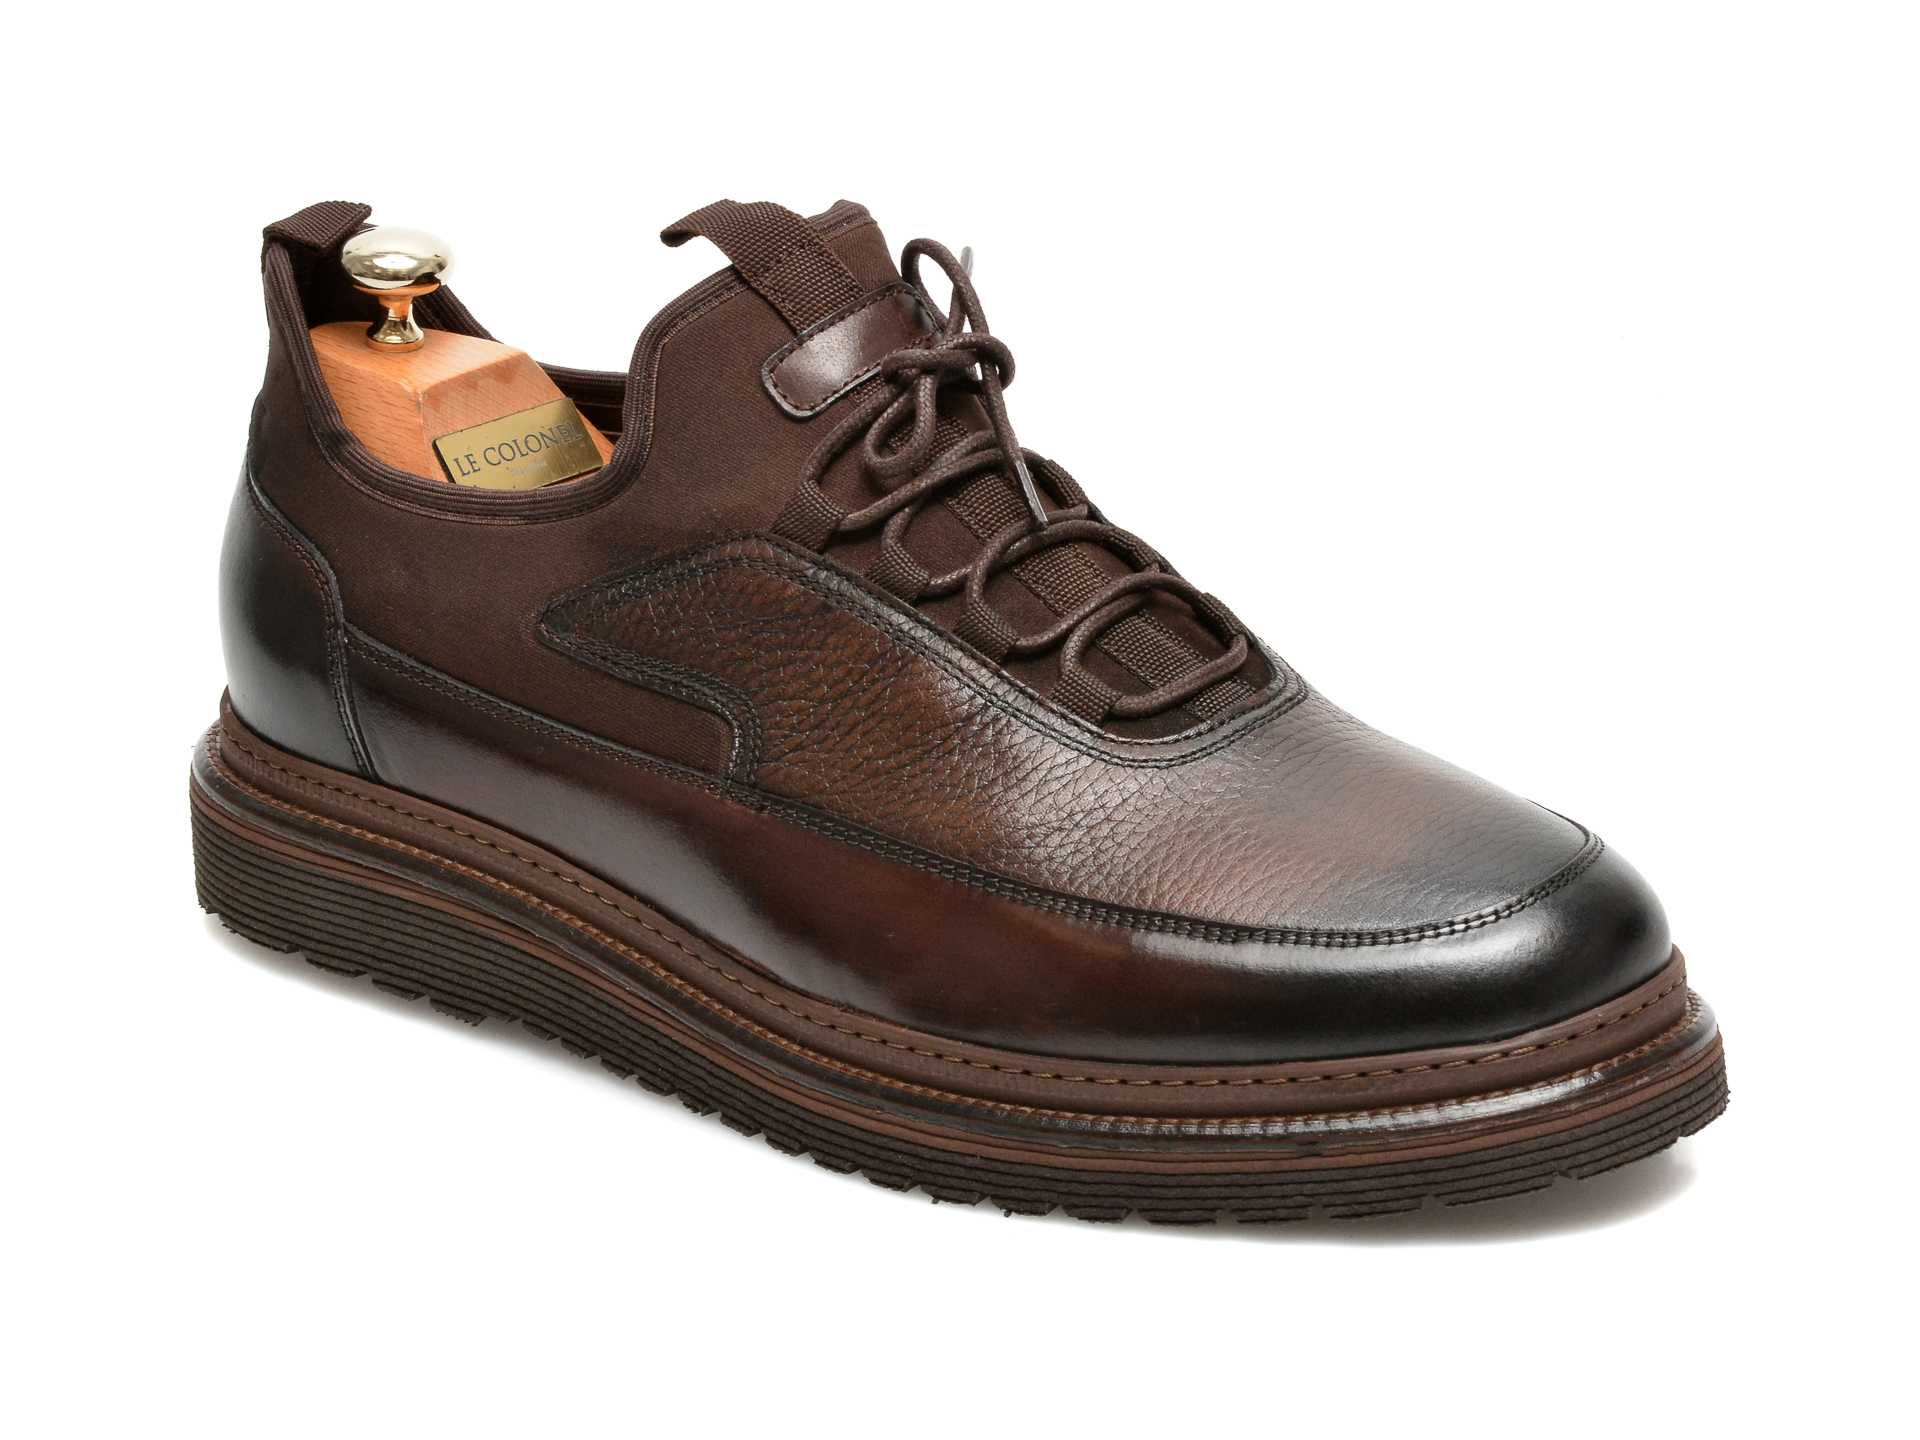 Pantofi LE COLONEL maro, 64816, din material textil si piele naturala Le Colonel imagine super redus 2022